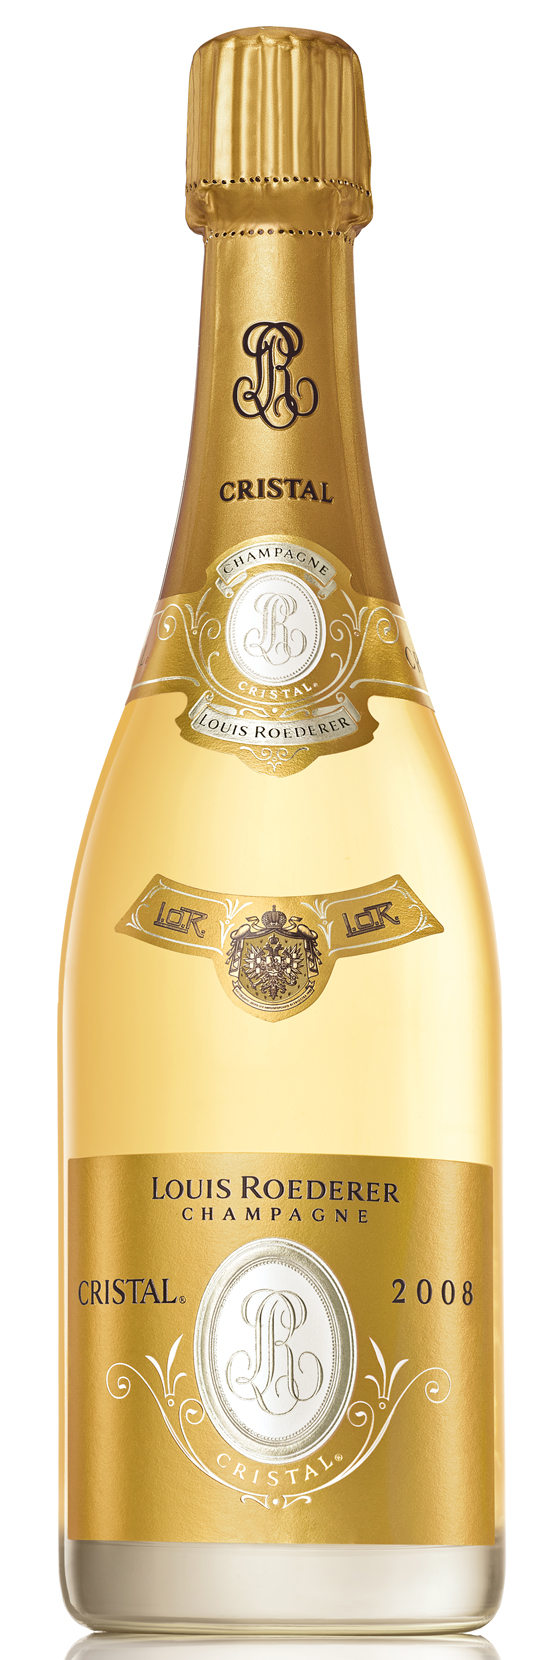 Champagne "Louis Roederer" Cristal blanc brut AOC 2014